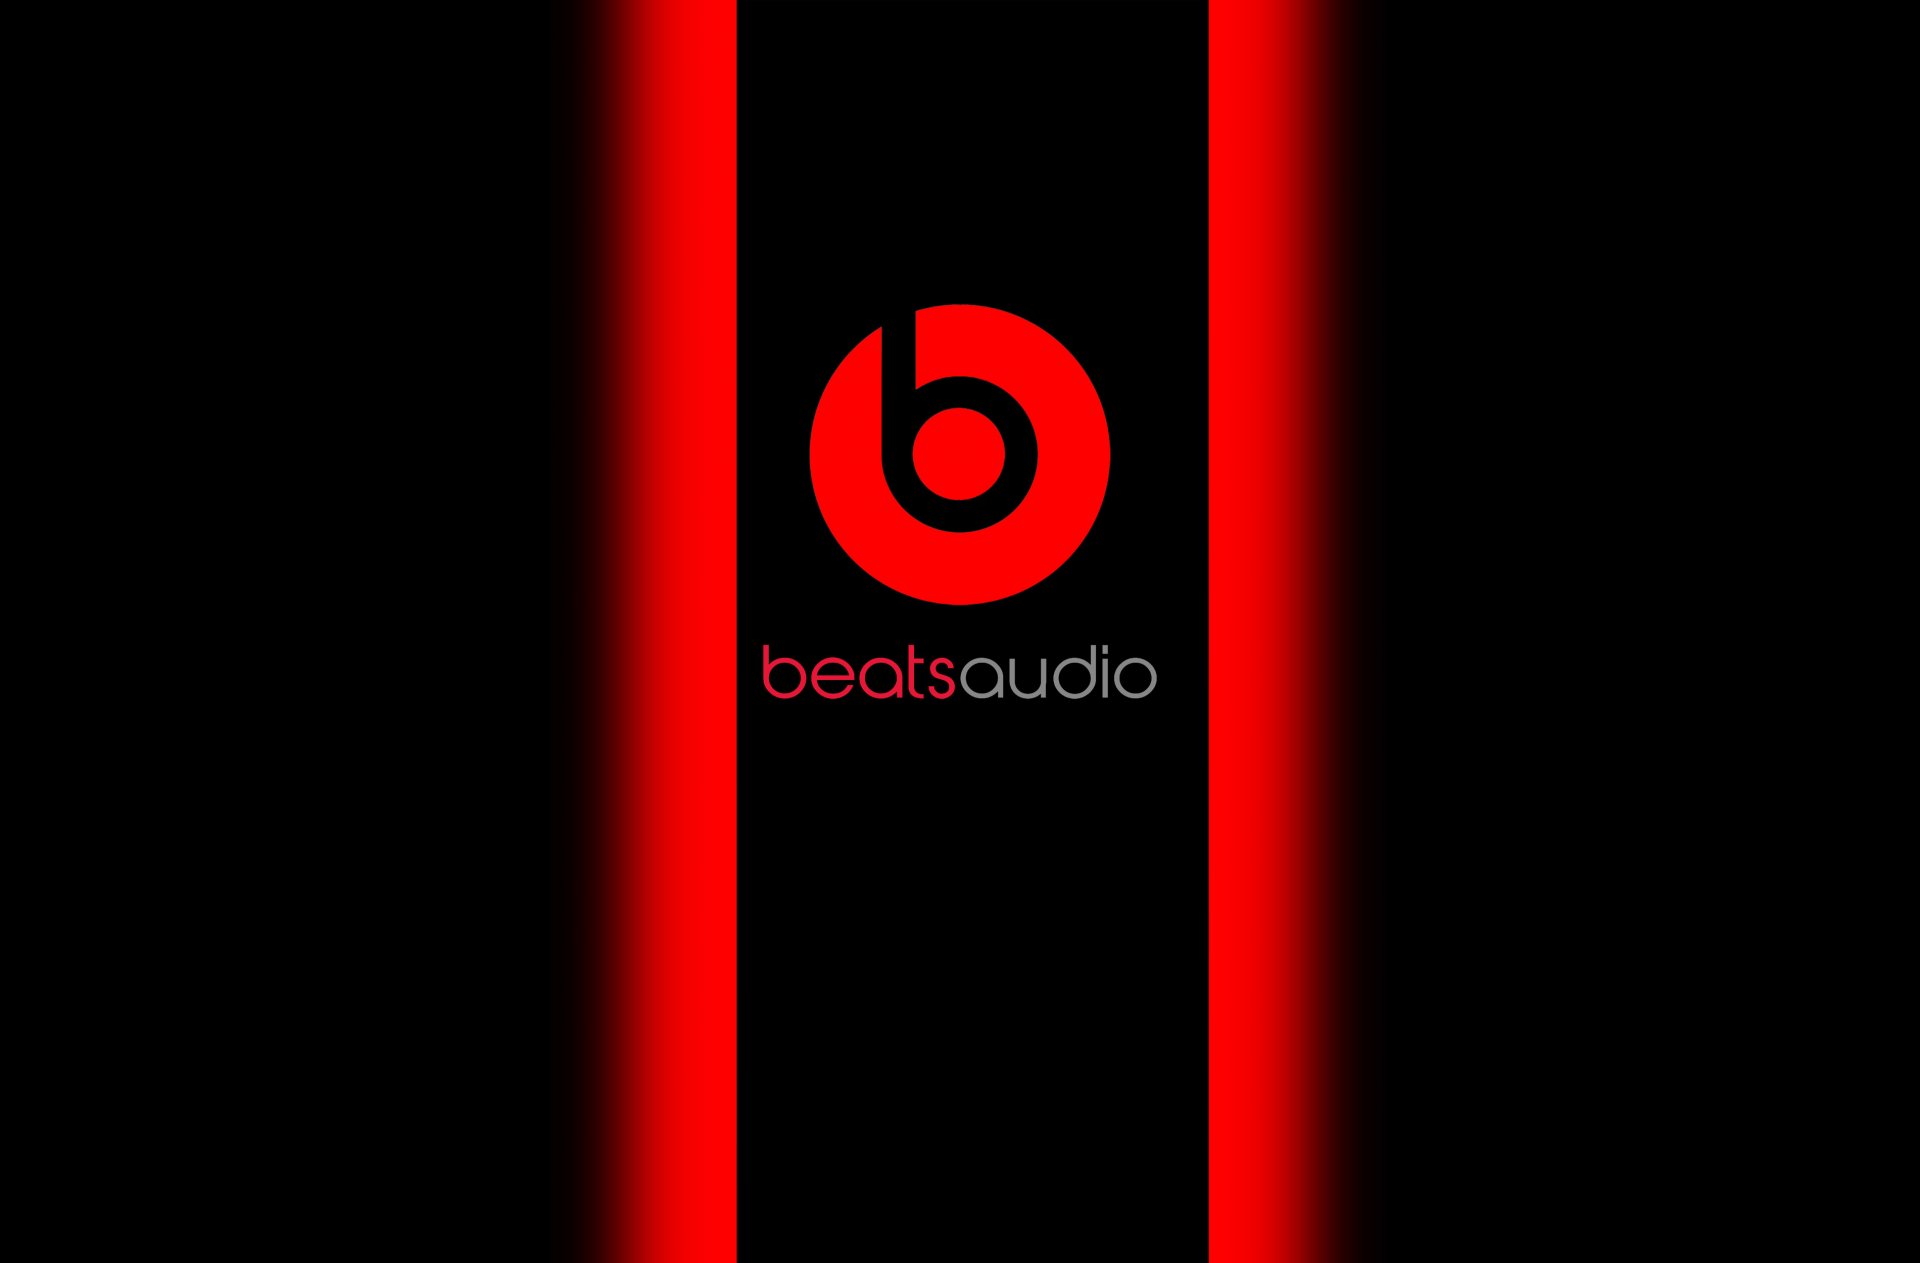 baetsaudio beats аудио музыка черный красный